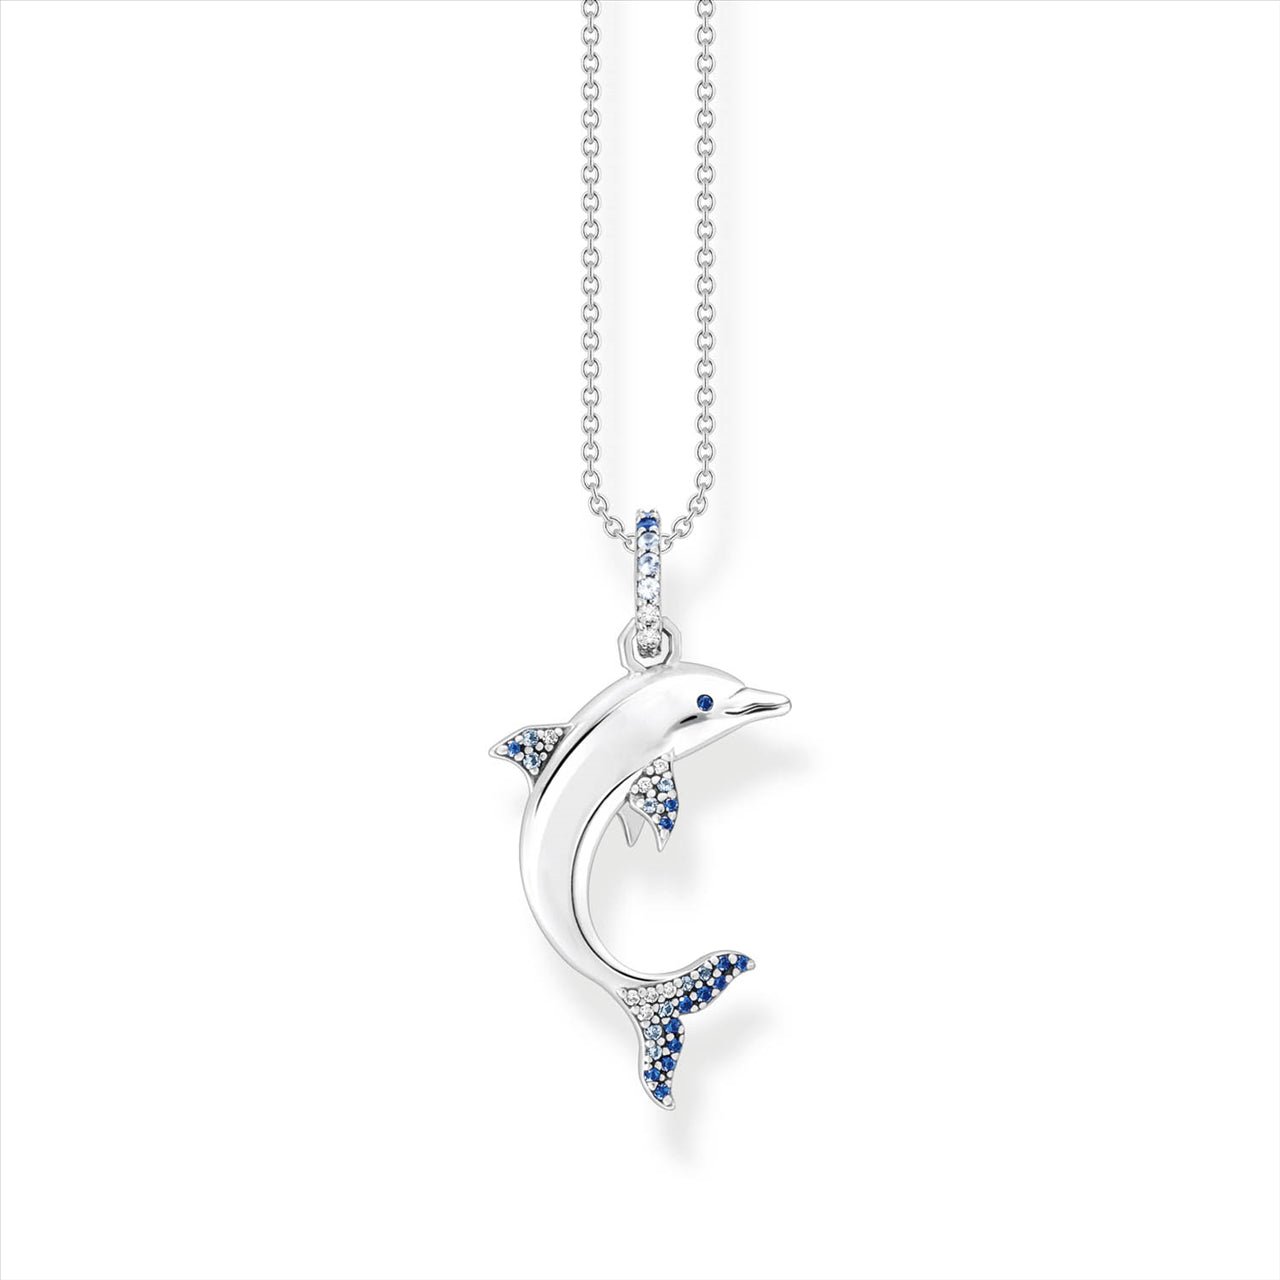 Thomas Sabo "Dolphin" Blue Stone Necklace